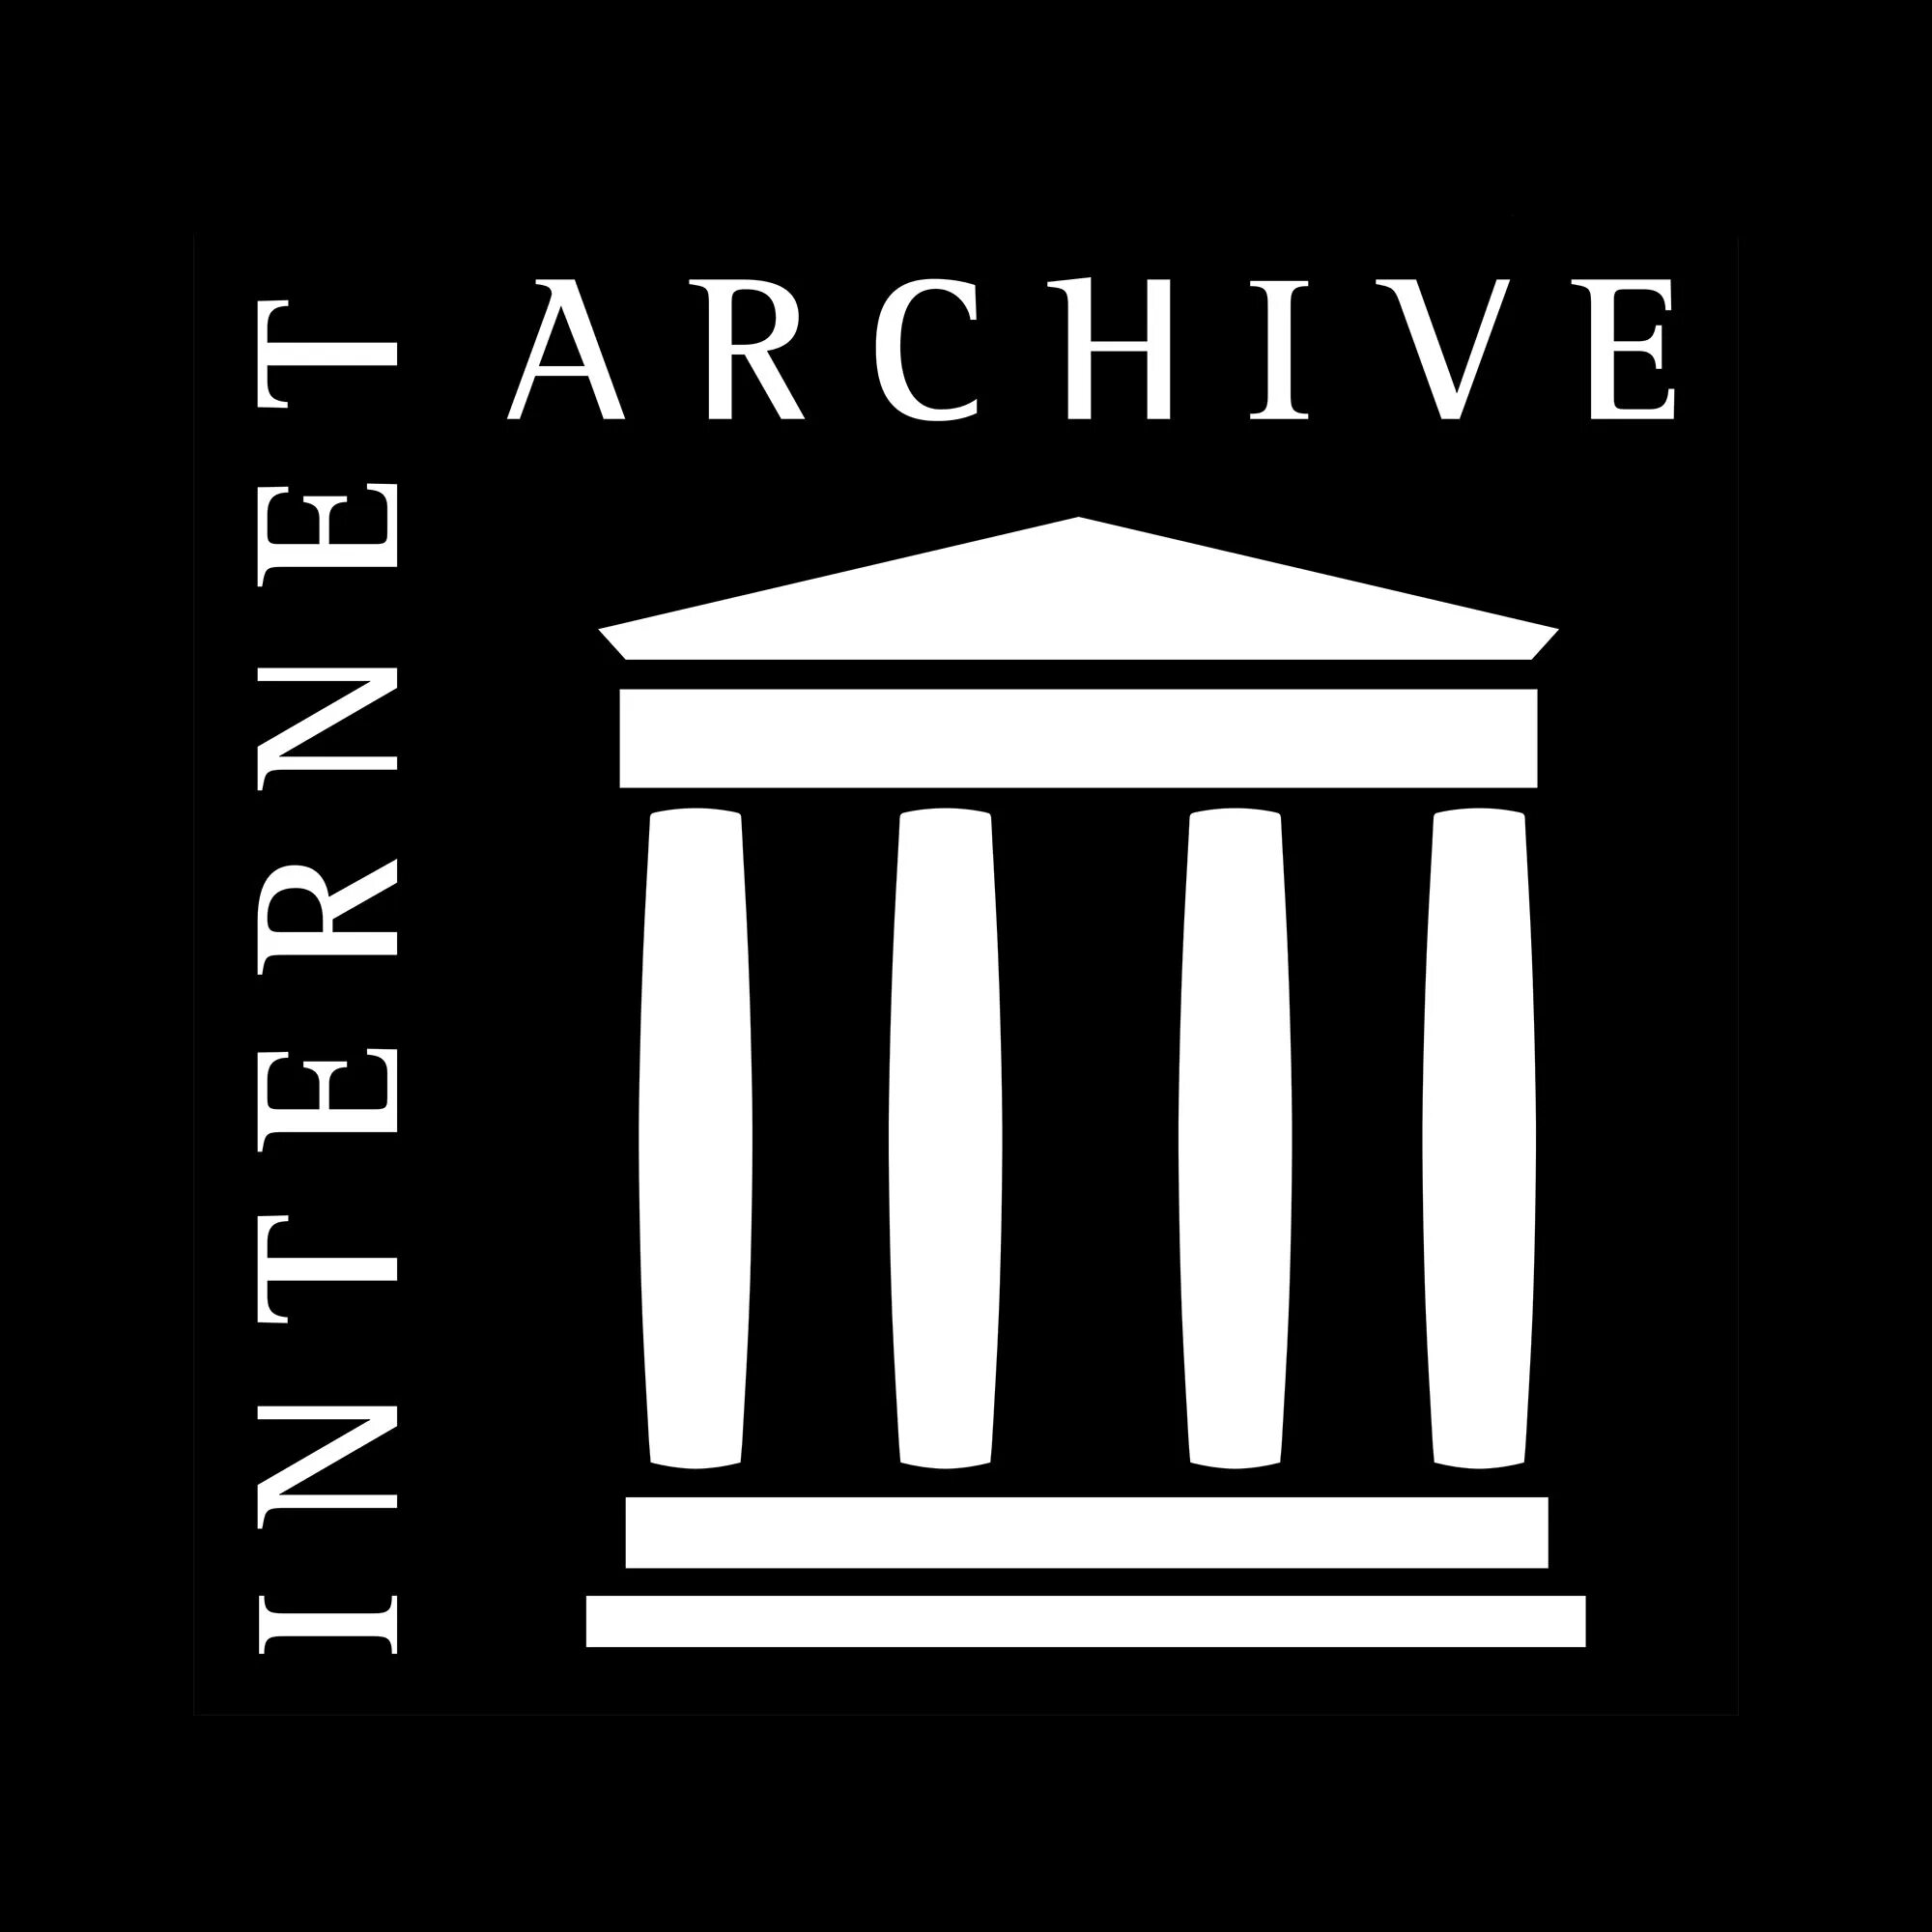 Archive page. Internet Archive. Internet Archive logo. Архитектурные здания. Архив логотип.